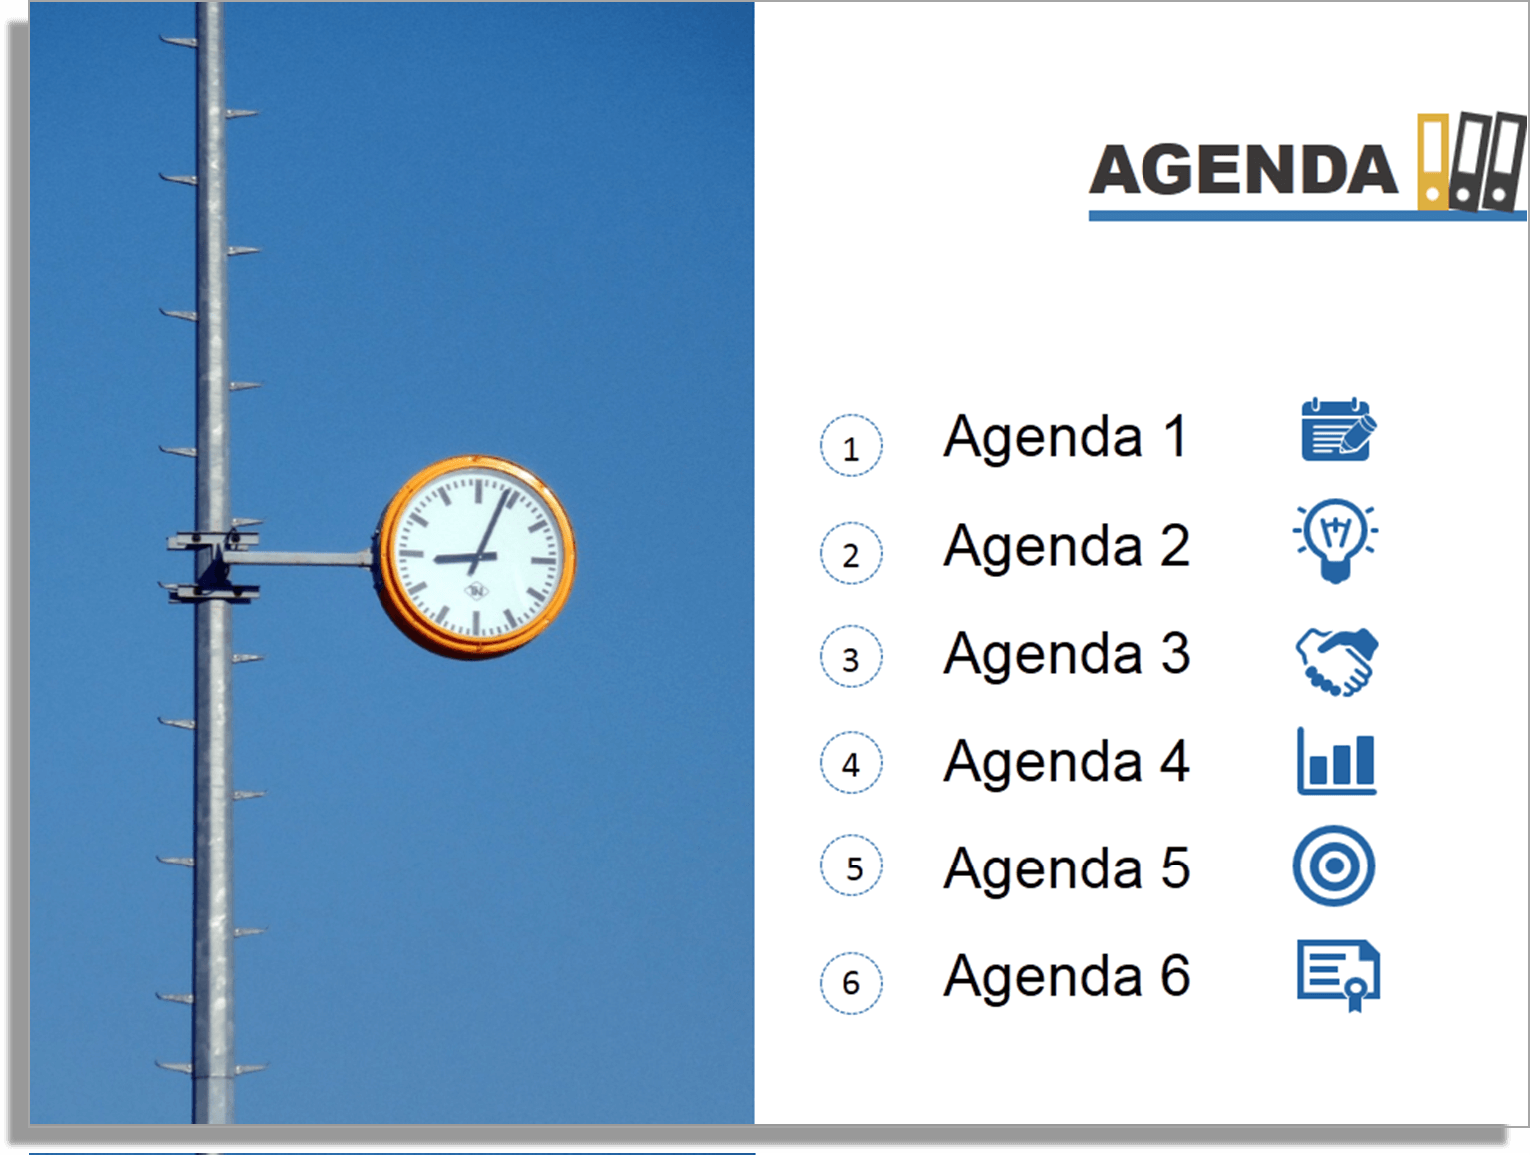 Agenda structure